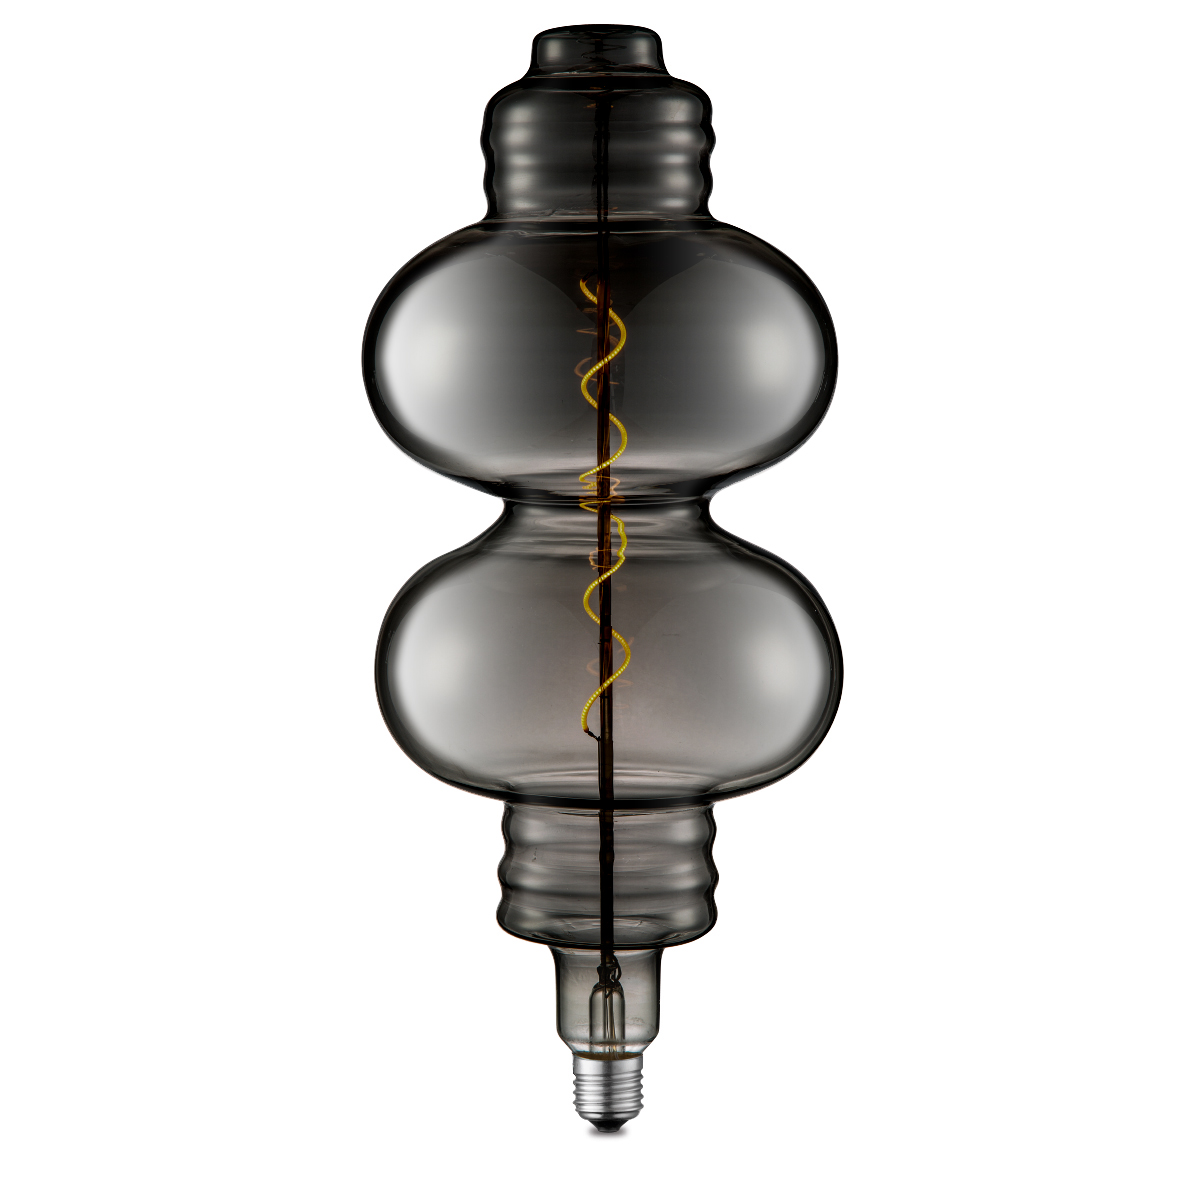 Tangla lighting - TLB-8046-04TM - LED Light Bulb Single Spiral filament - special 4W titanium - twins - dimmable - E27